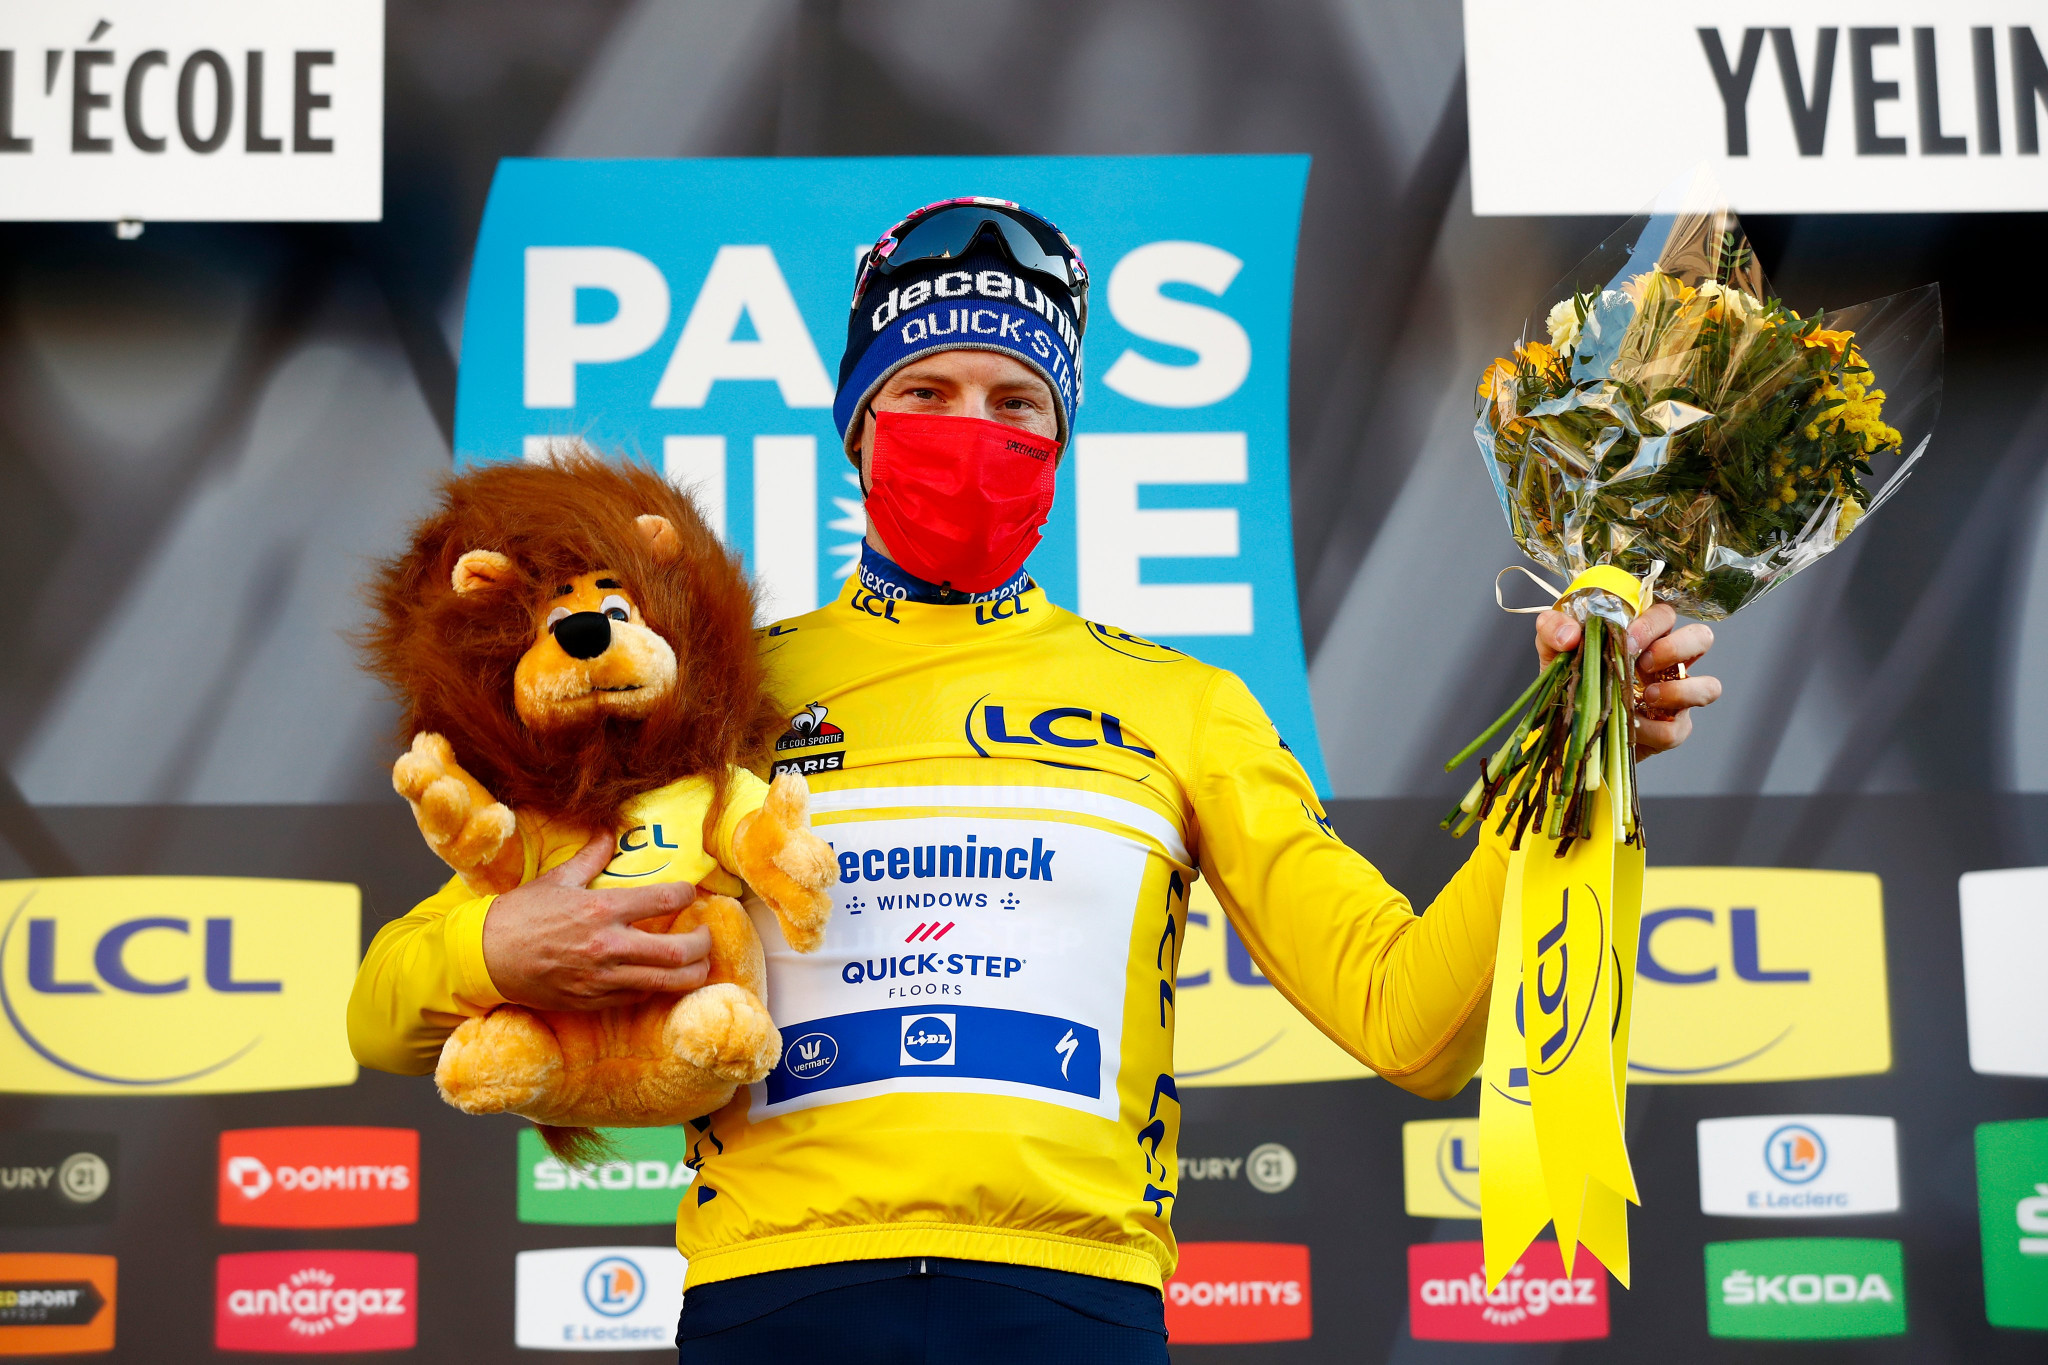 Bennett wins first stage of Paris-Nice